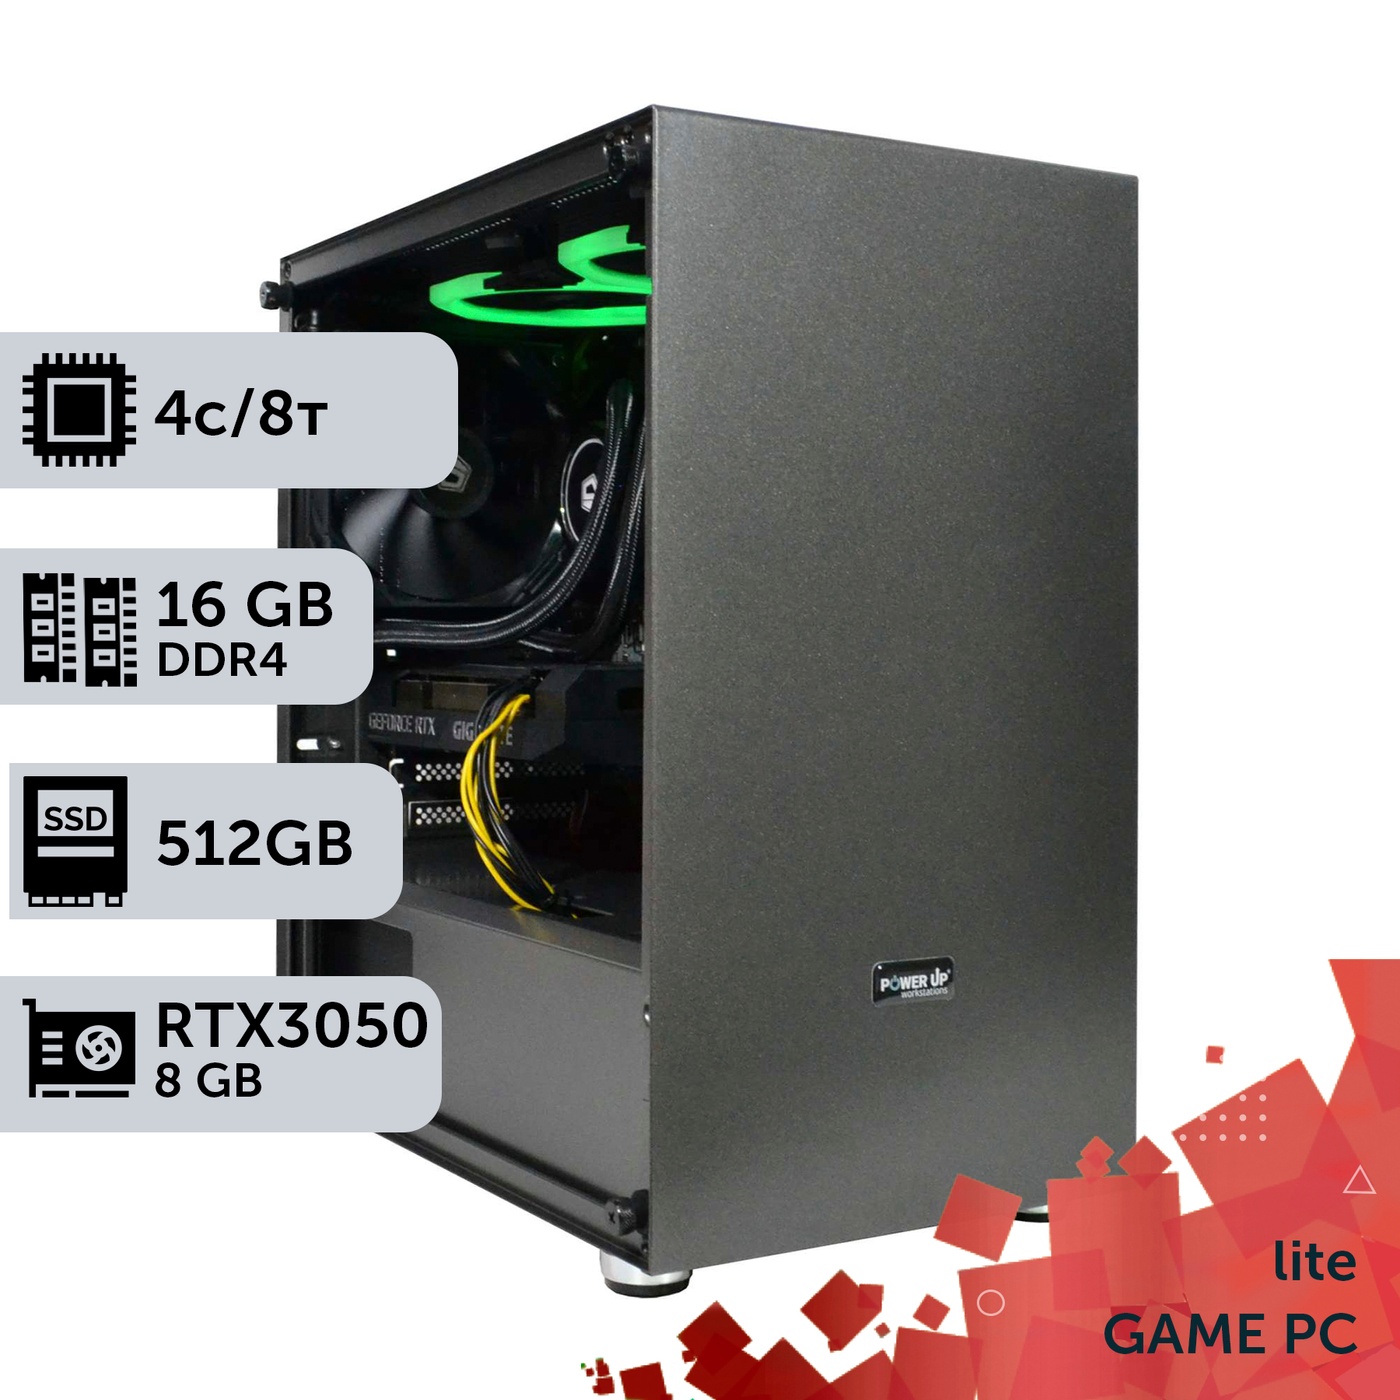 Игровой компьютер GamePC Lite #124 Core i3 10100F/16 GB/SSD 512GB/GeForce RTX 3050 8GB